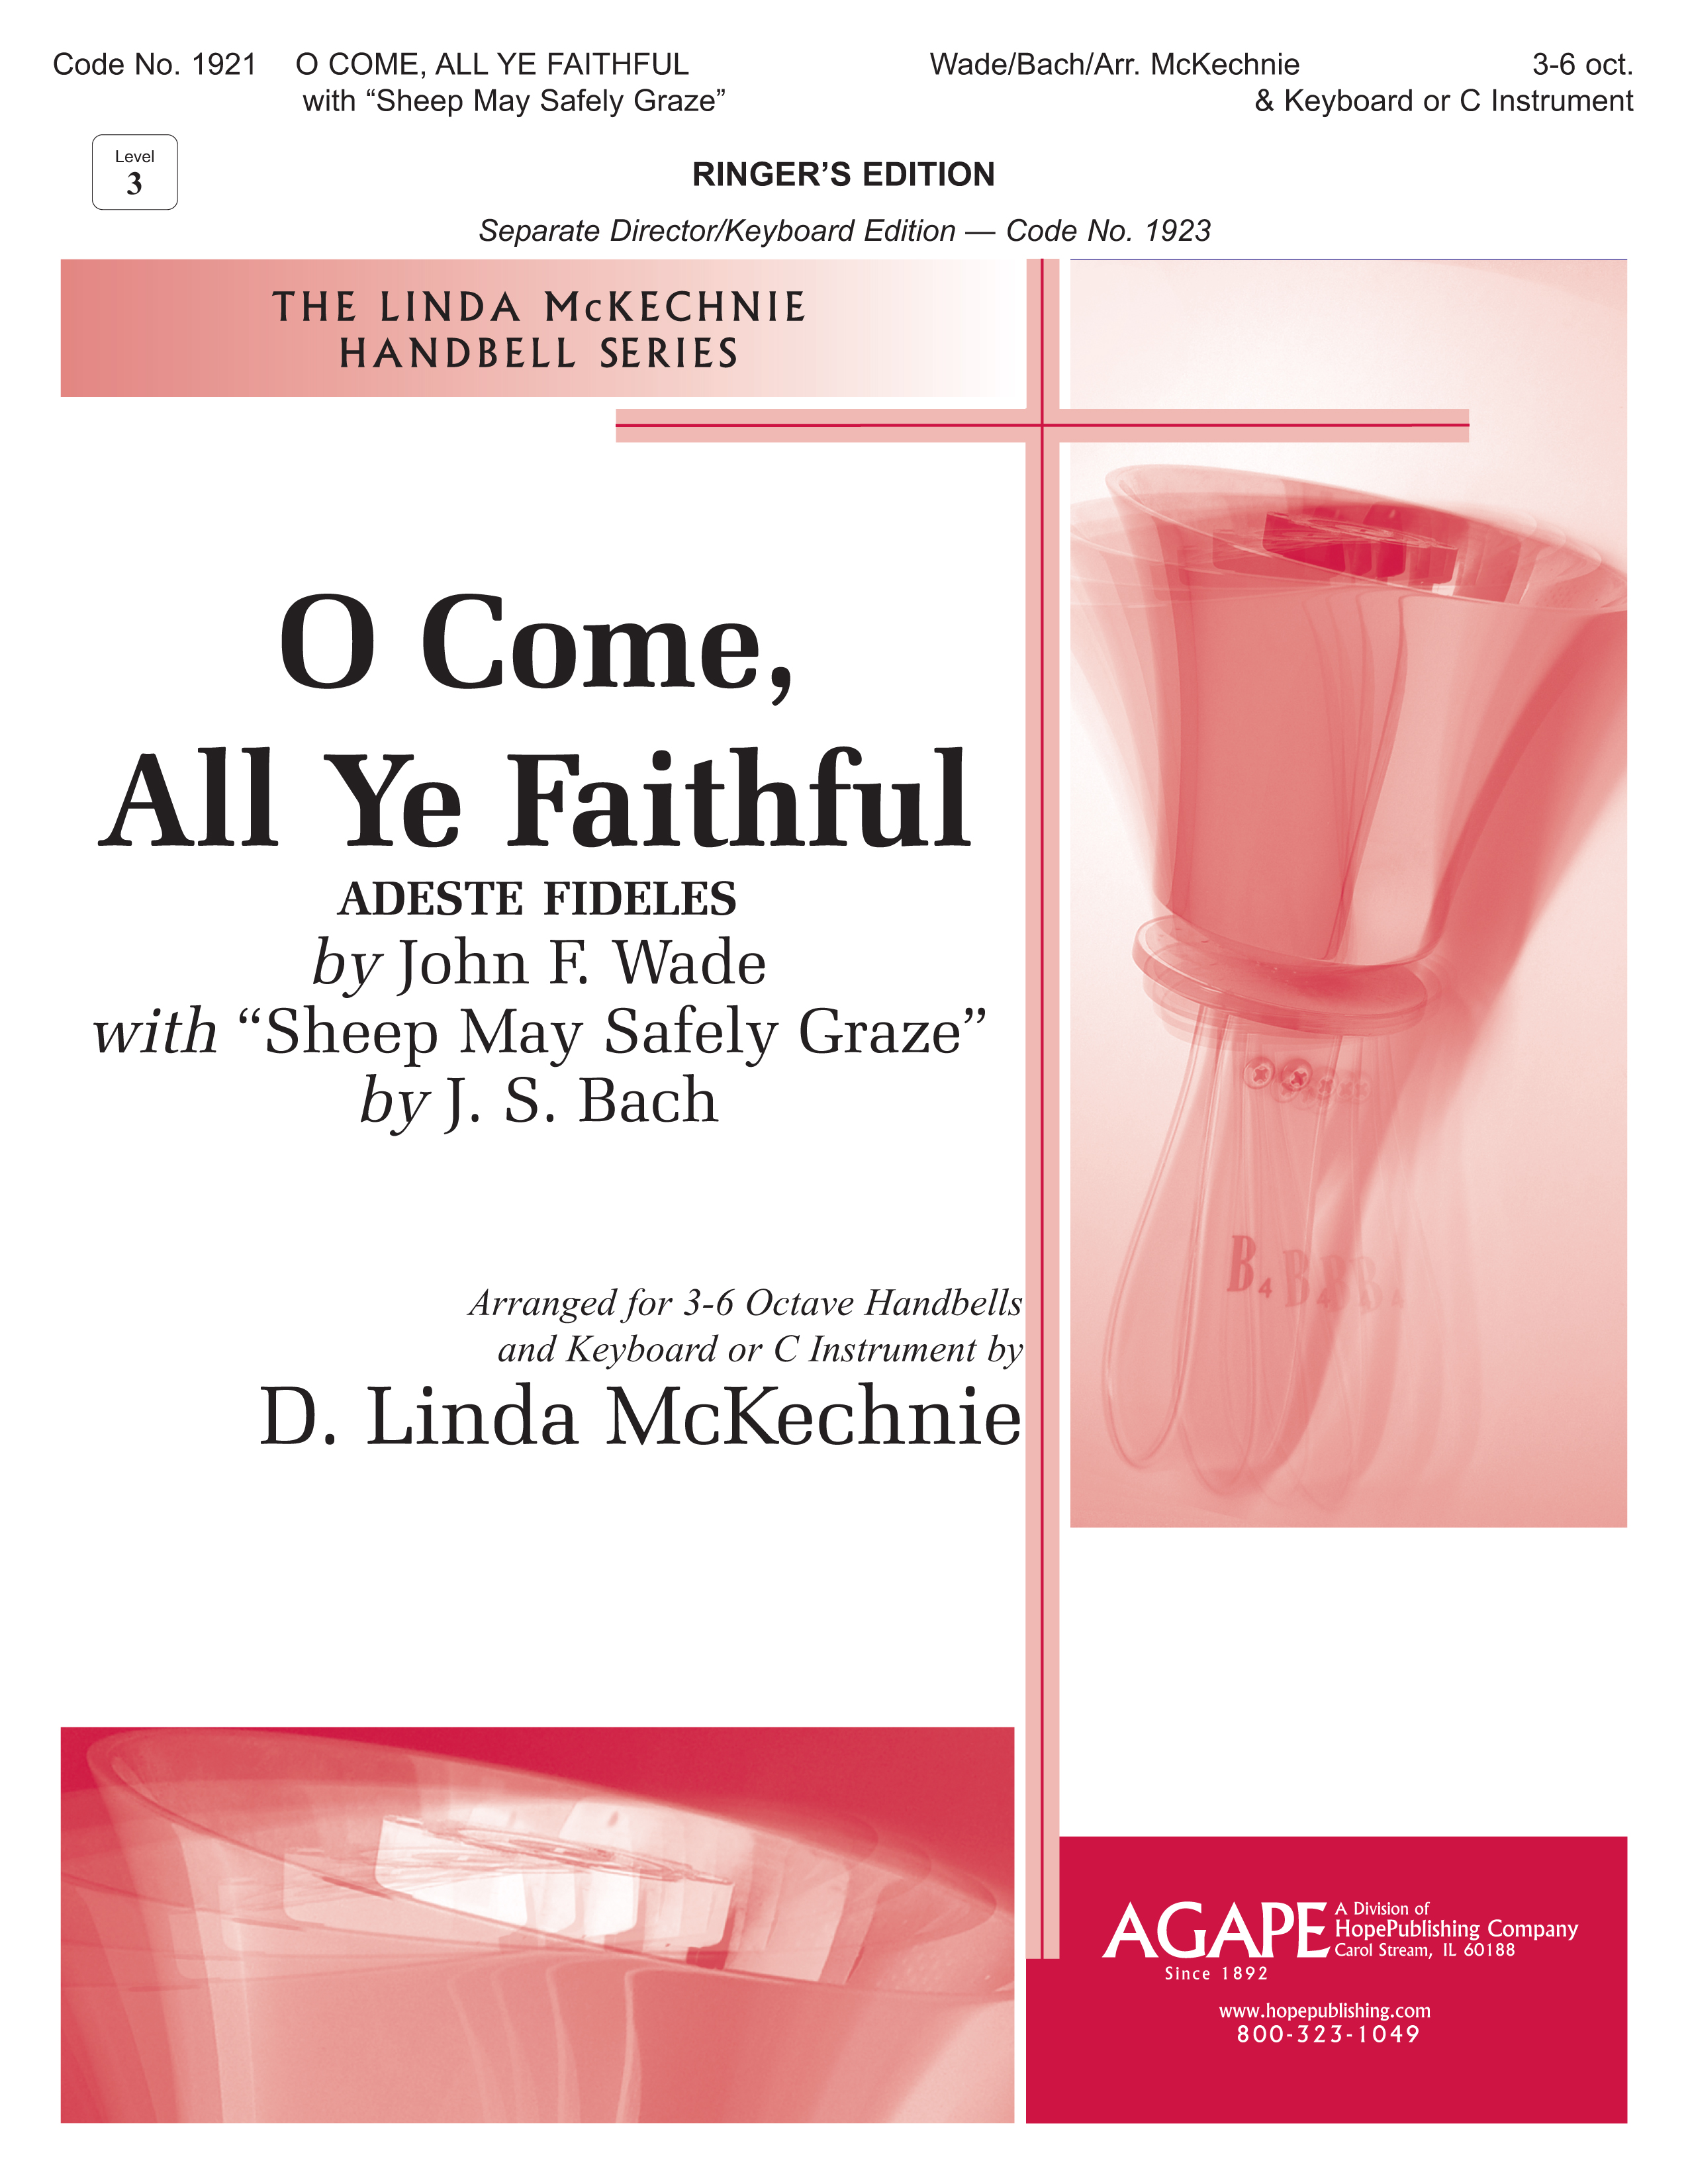 O Come All Ye Faithful - 3-6 Oct. Ringer's Ed. Cover Image